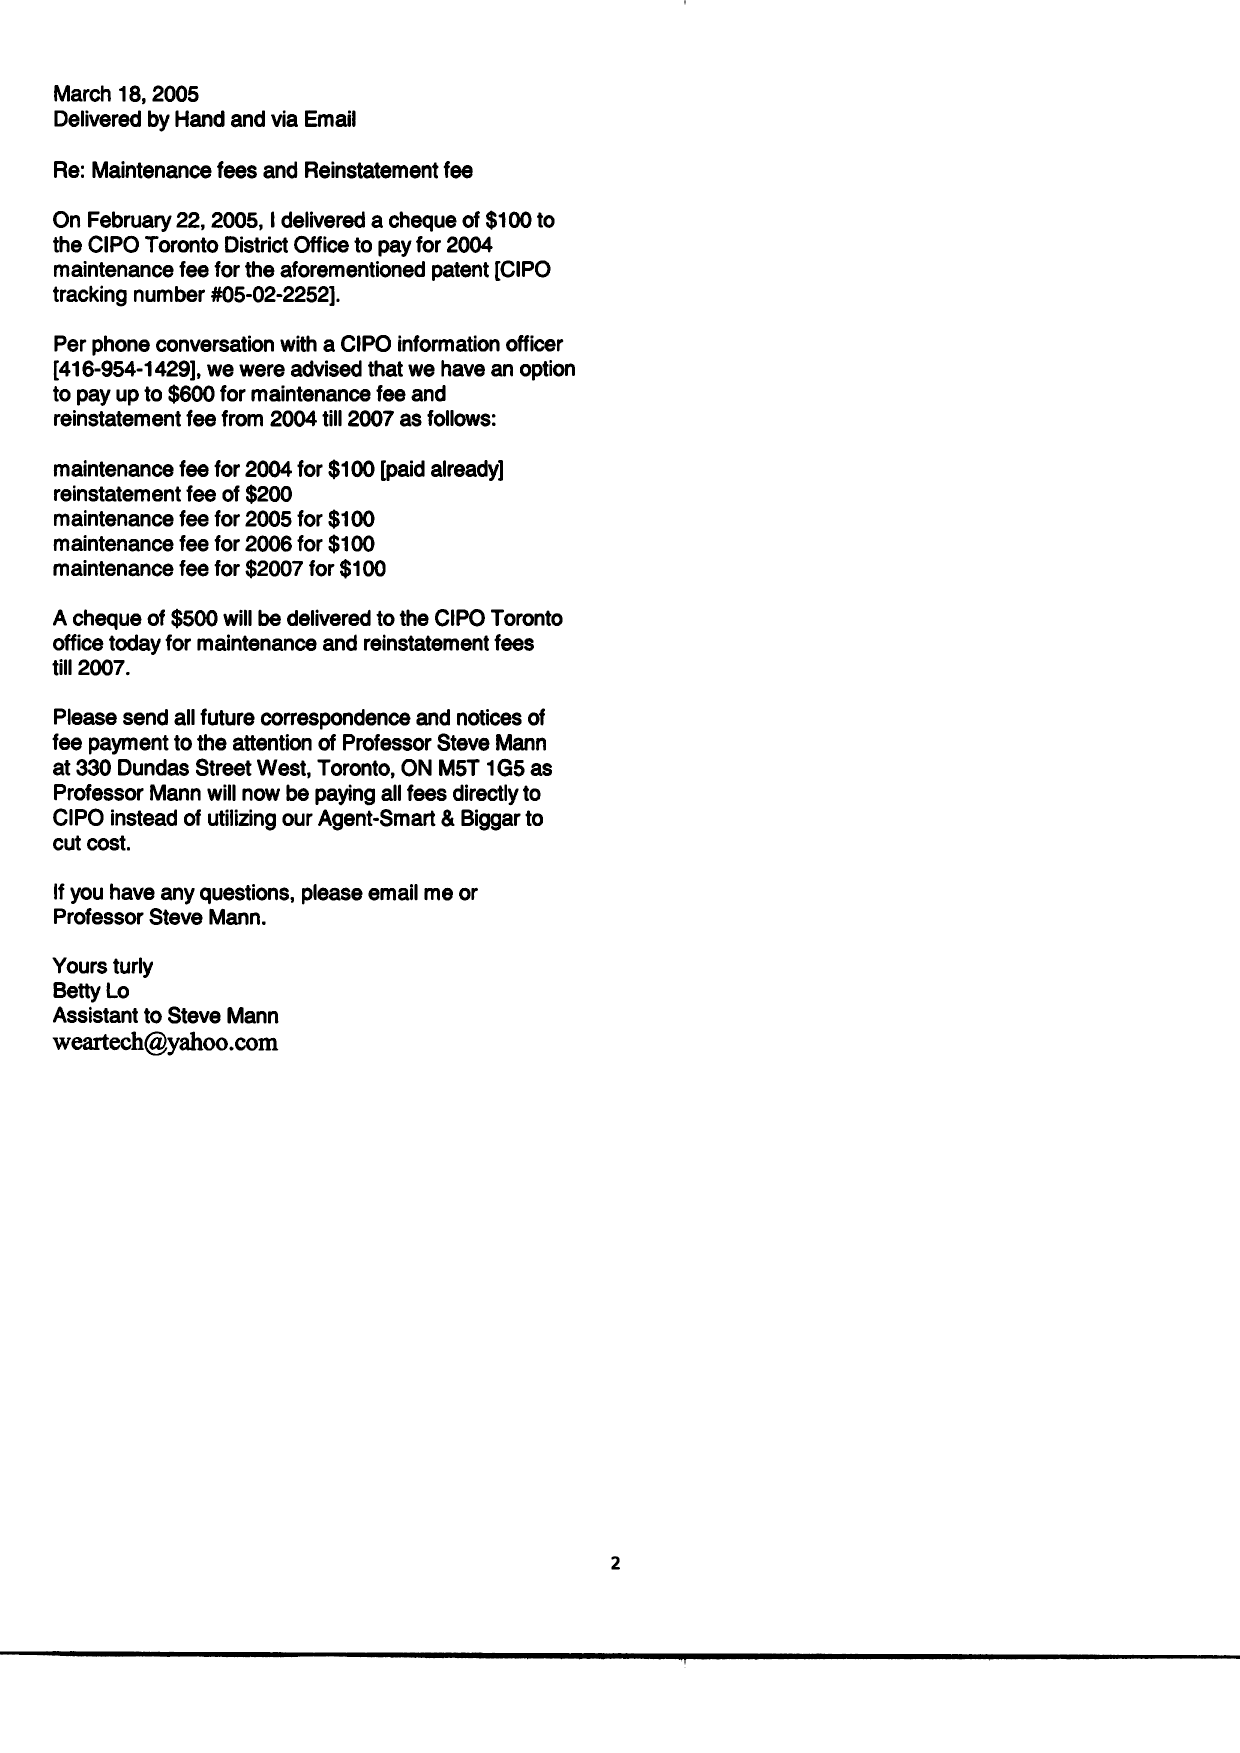 Canadian Patent Document 2310114. Correspondence 20050321. Image 2 of 2